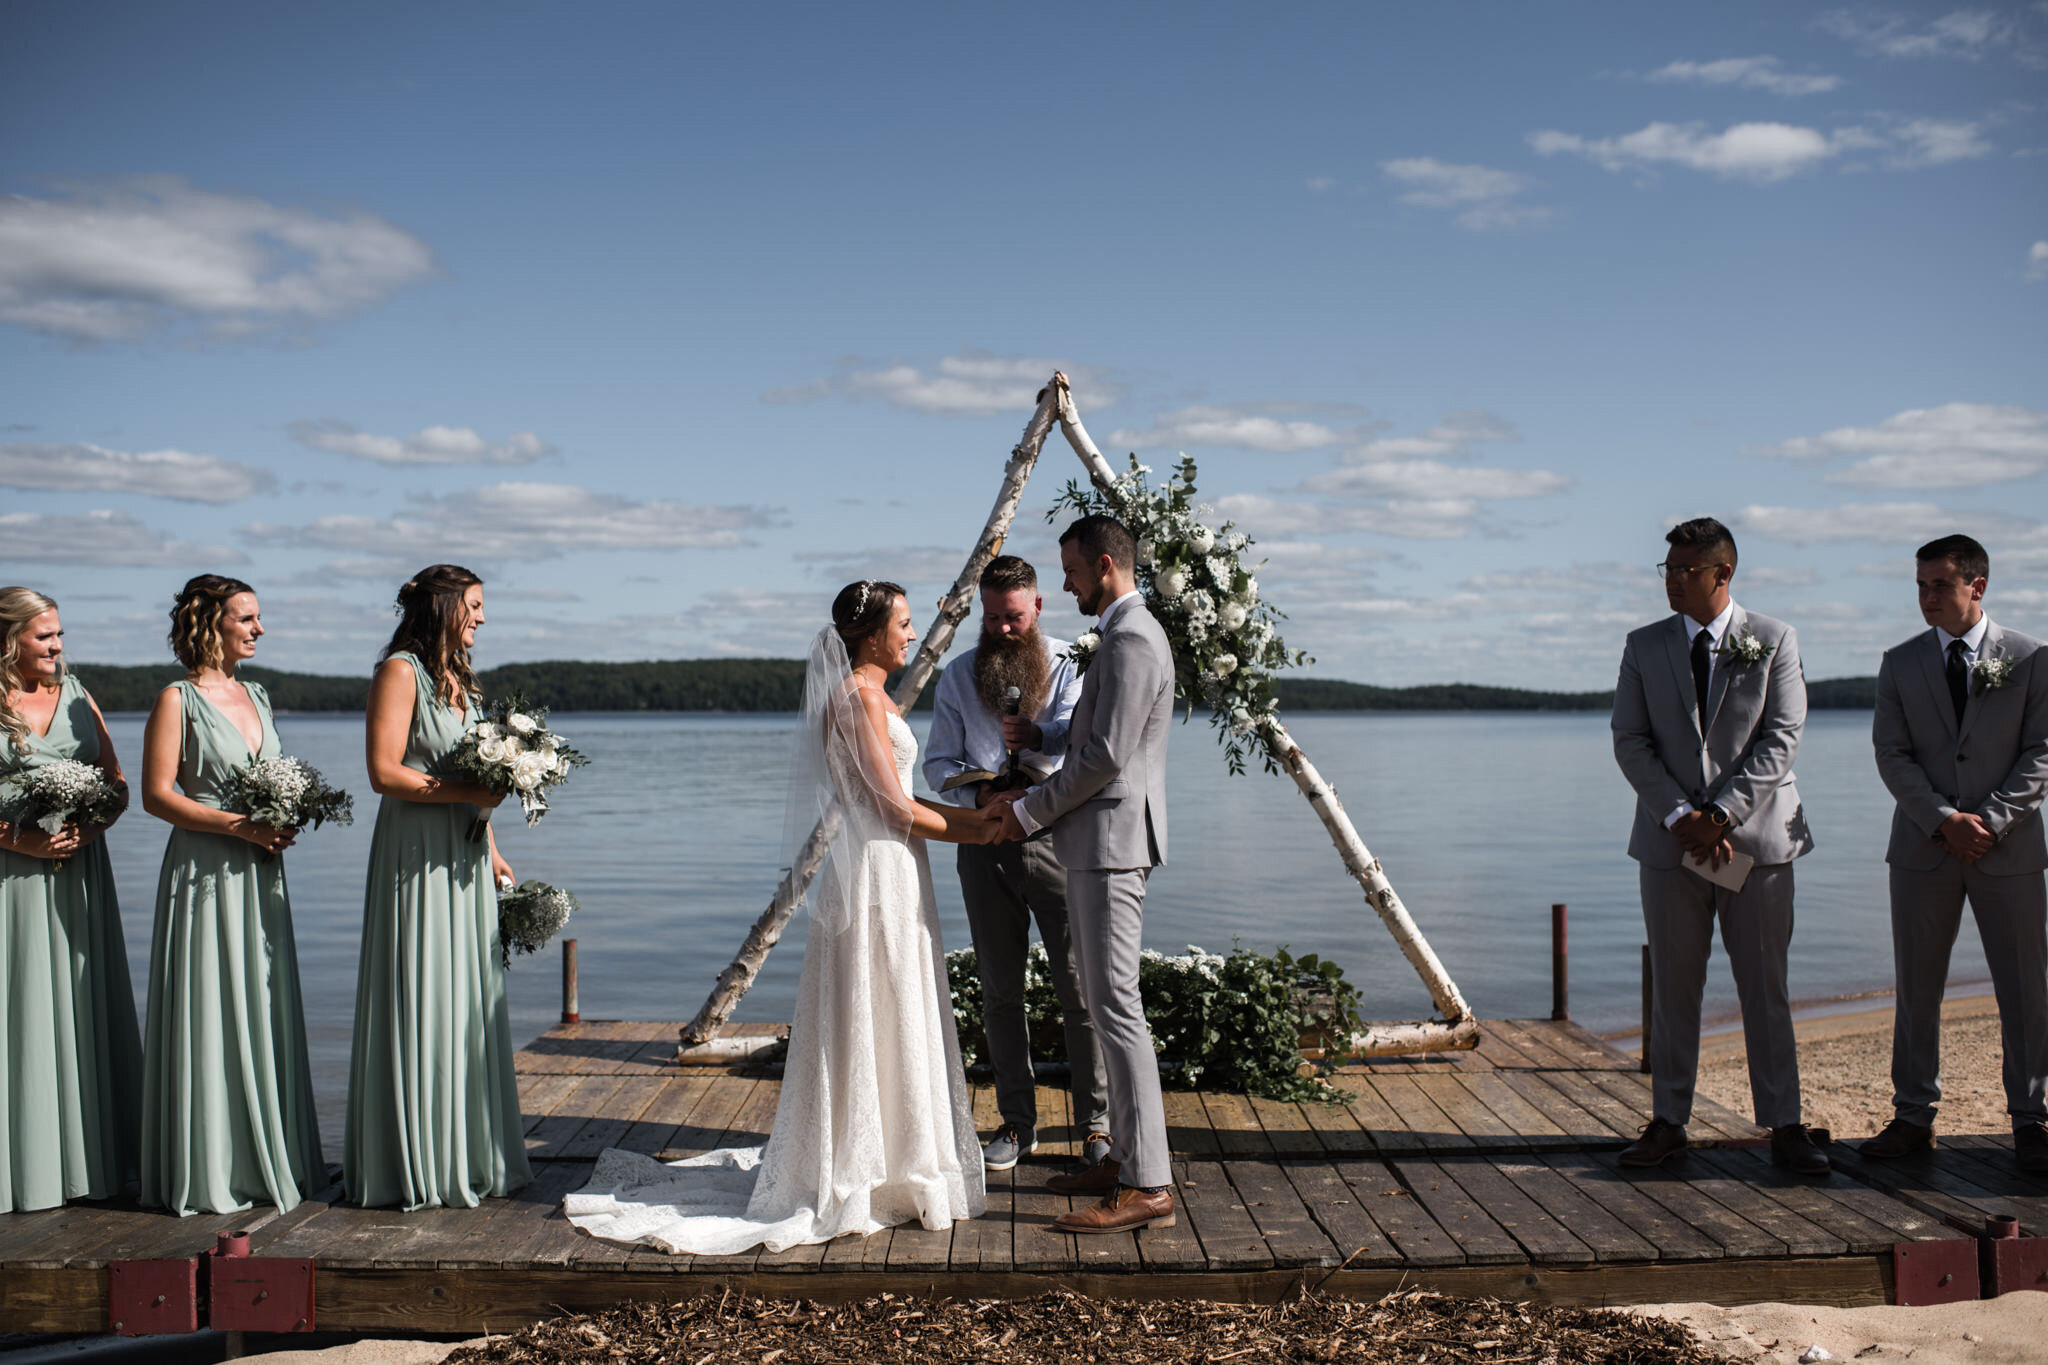 610-outdoor-wedding-ceremony-by-the-lake-sundridge.jpg